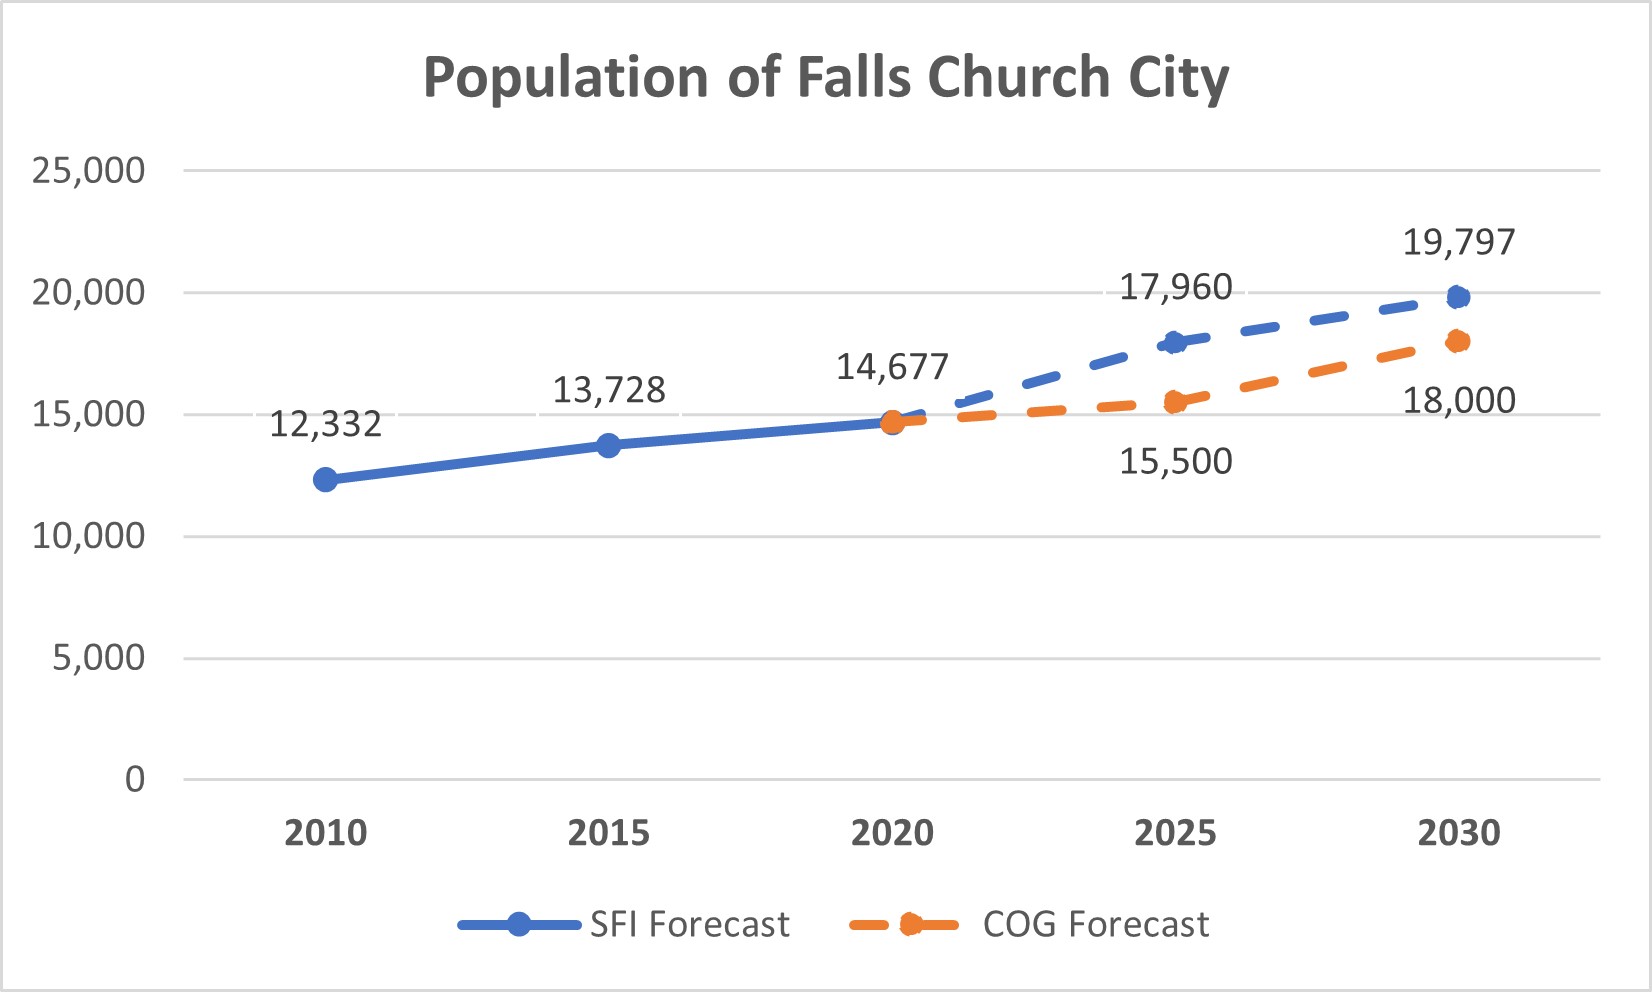 Population of Falls Church City 2010-2030